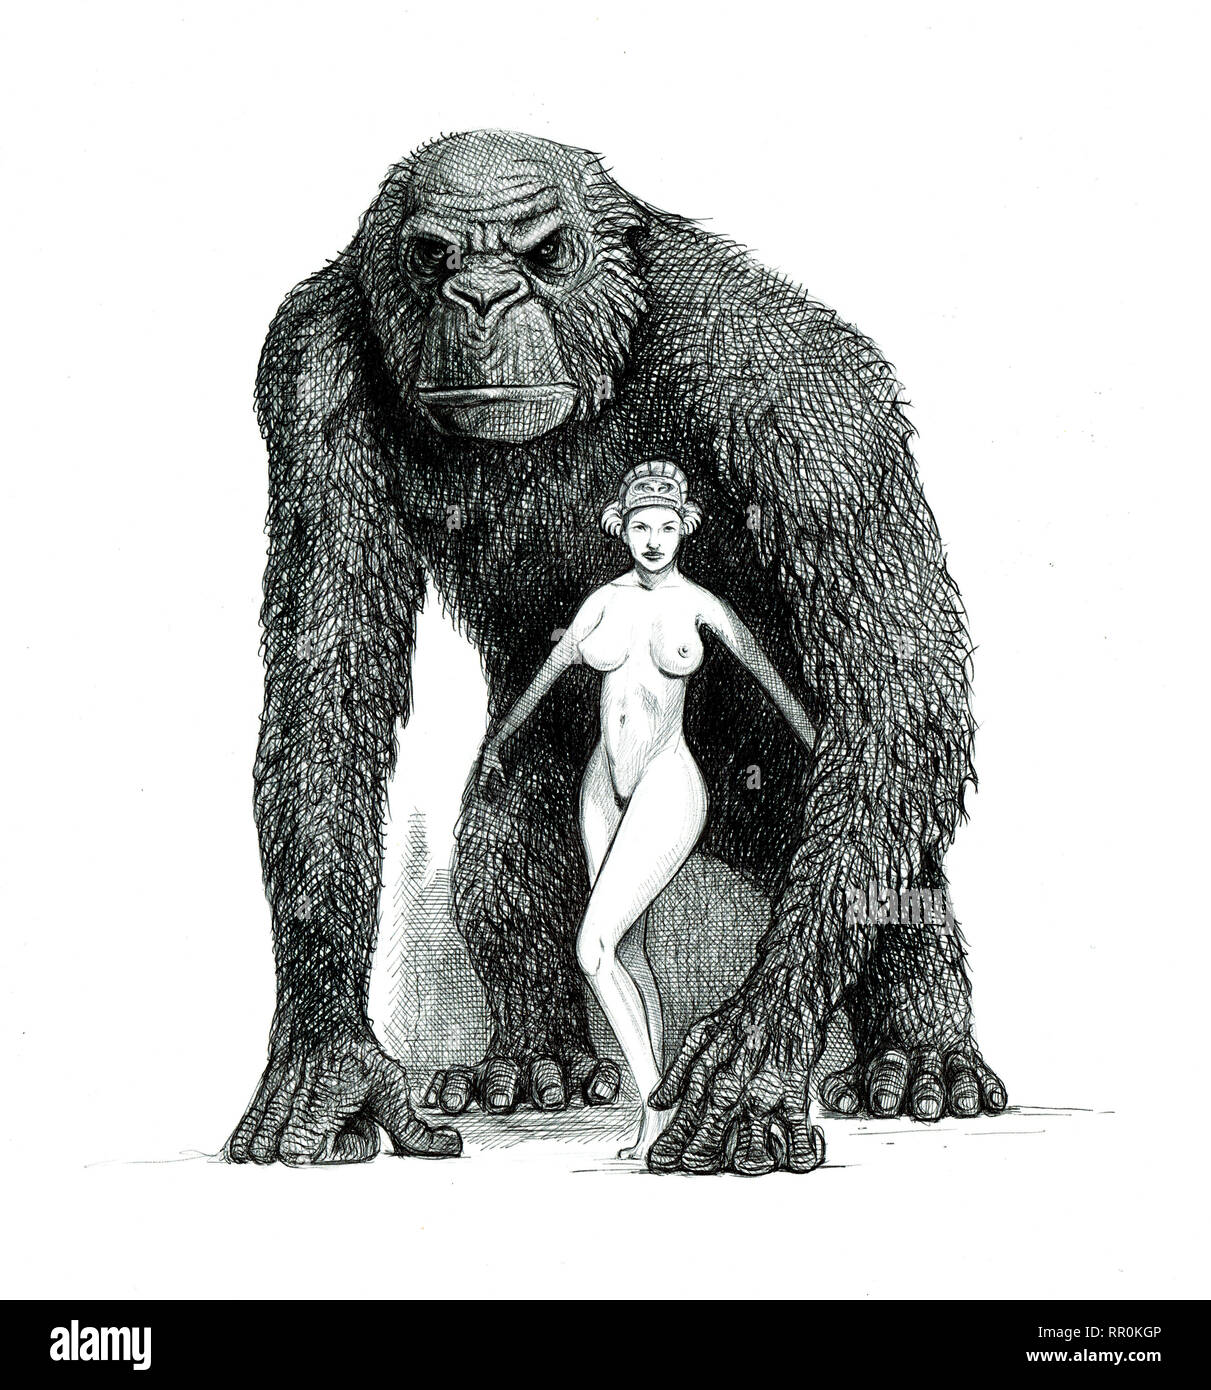 Big ape with girl illustration. Gorilla Ape drawing. Stock Photo